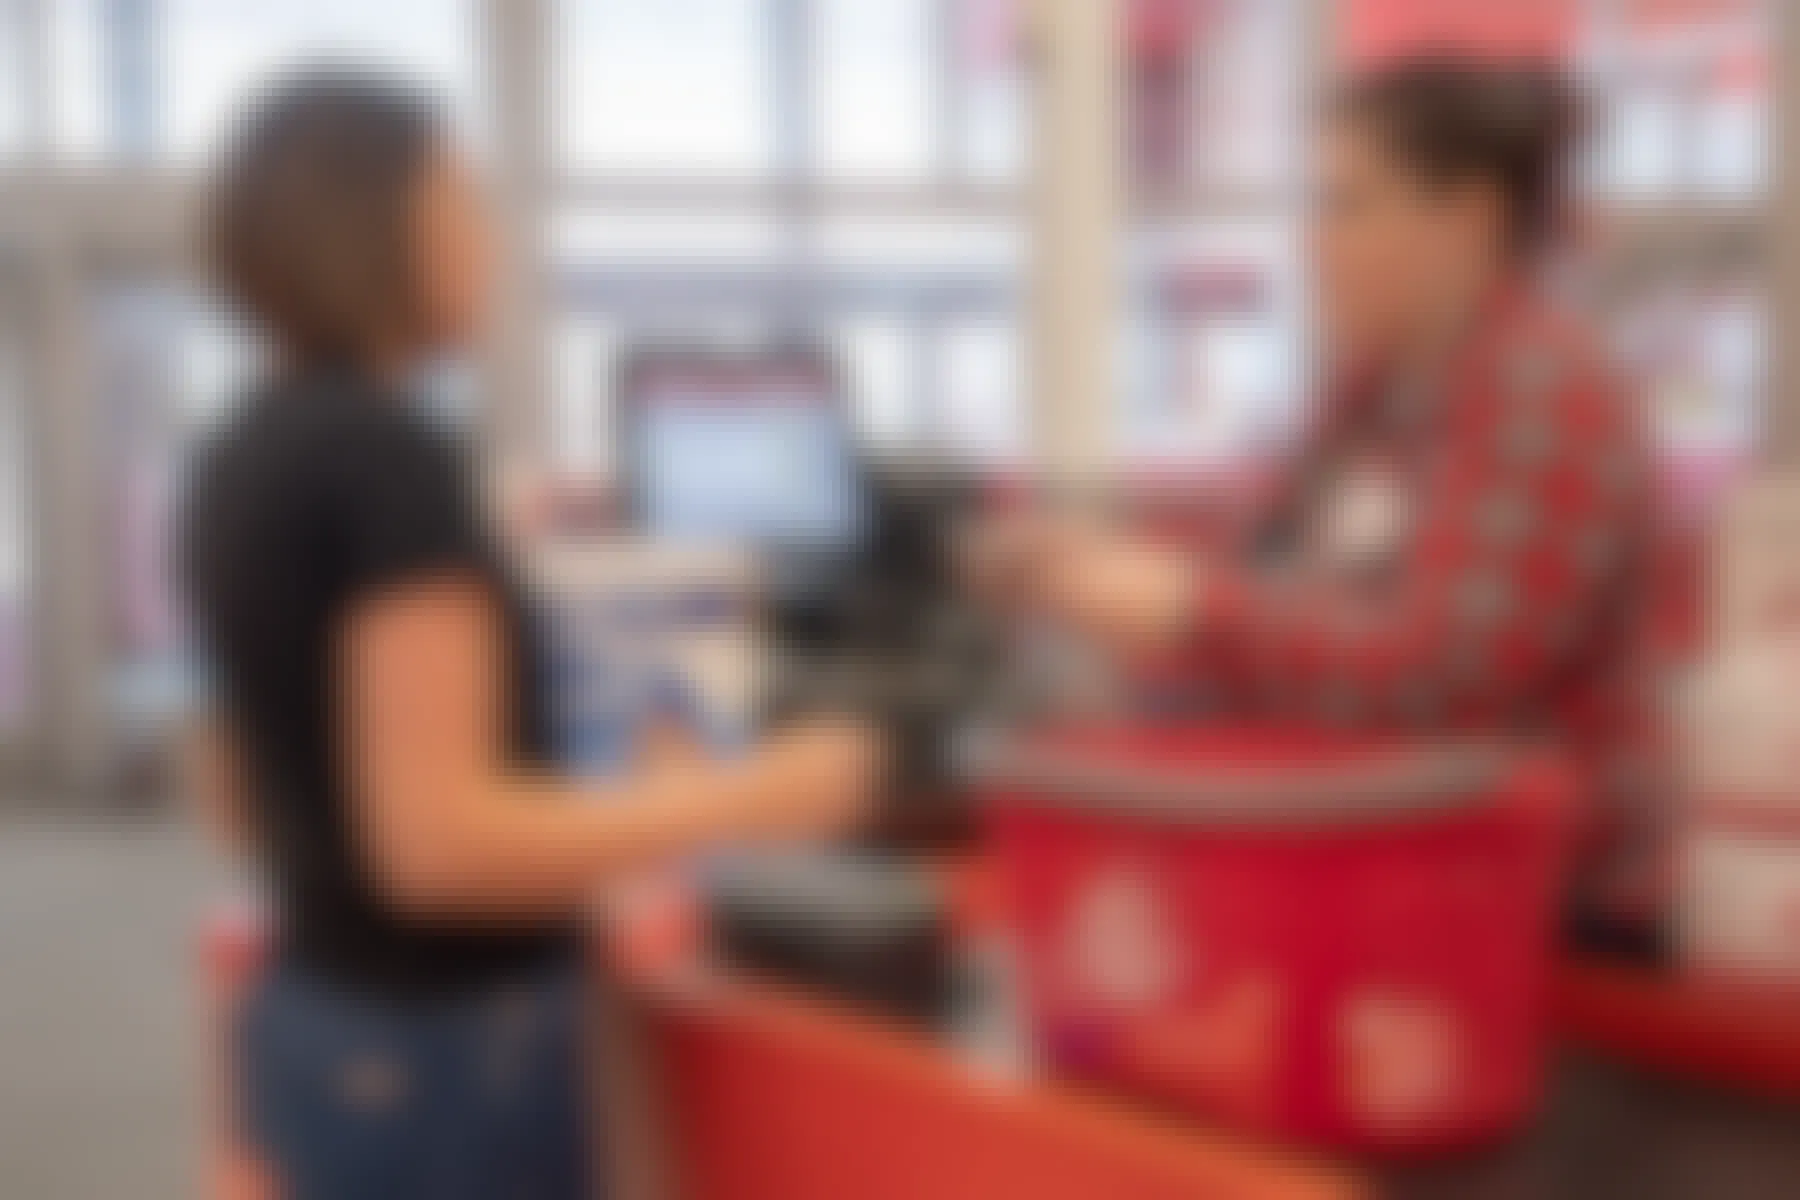 woman talking to cashier at checkout at target